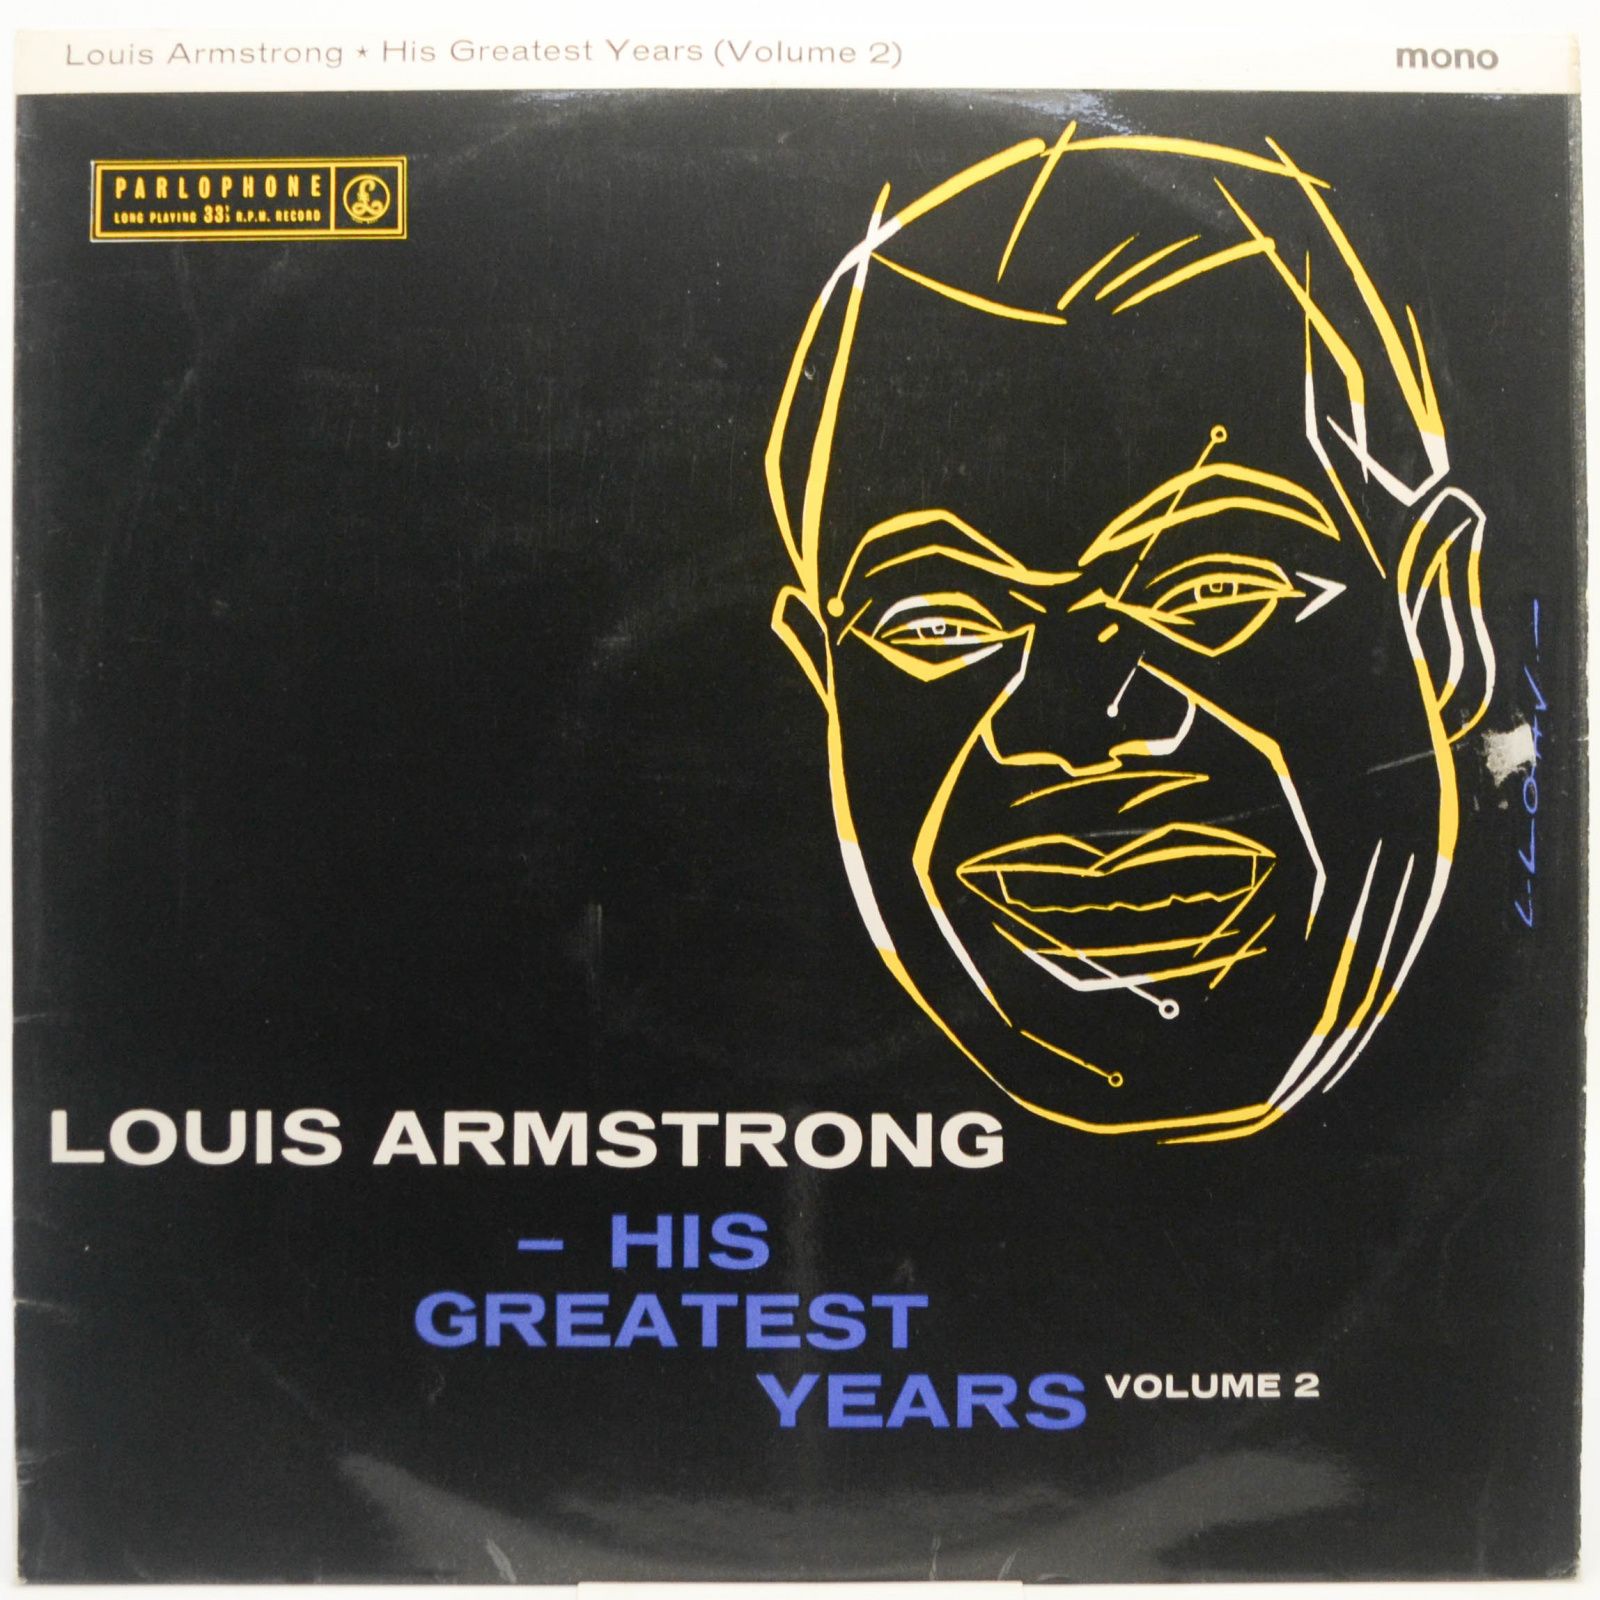 His Greatest Years - Volume 2 (UK), 1961